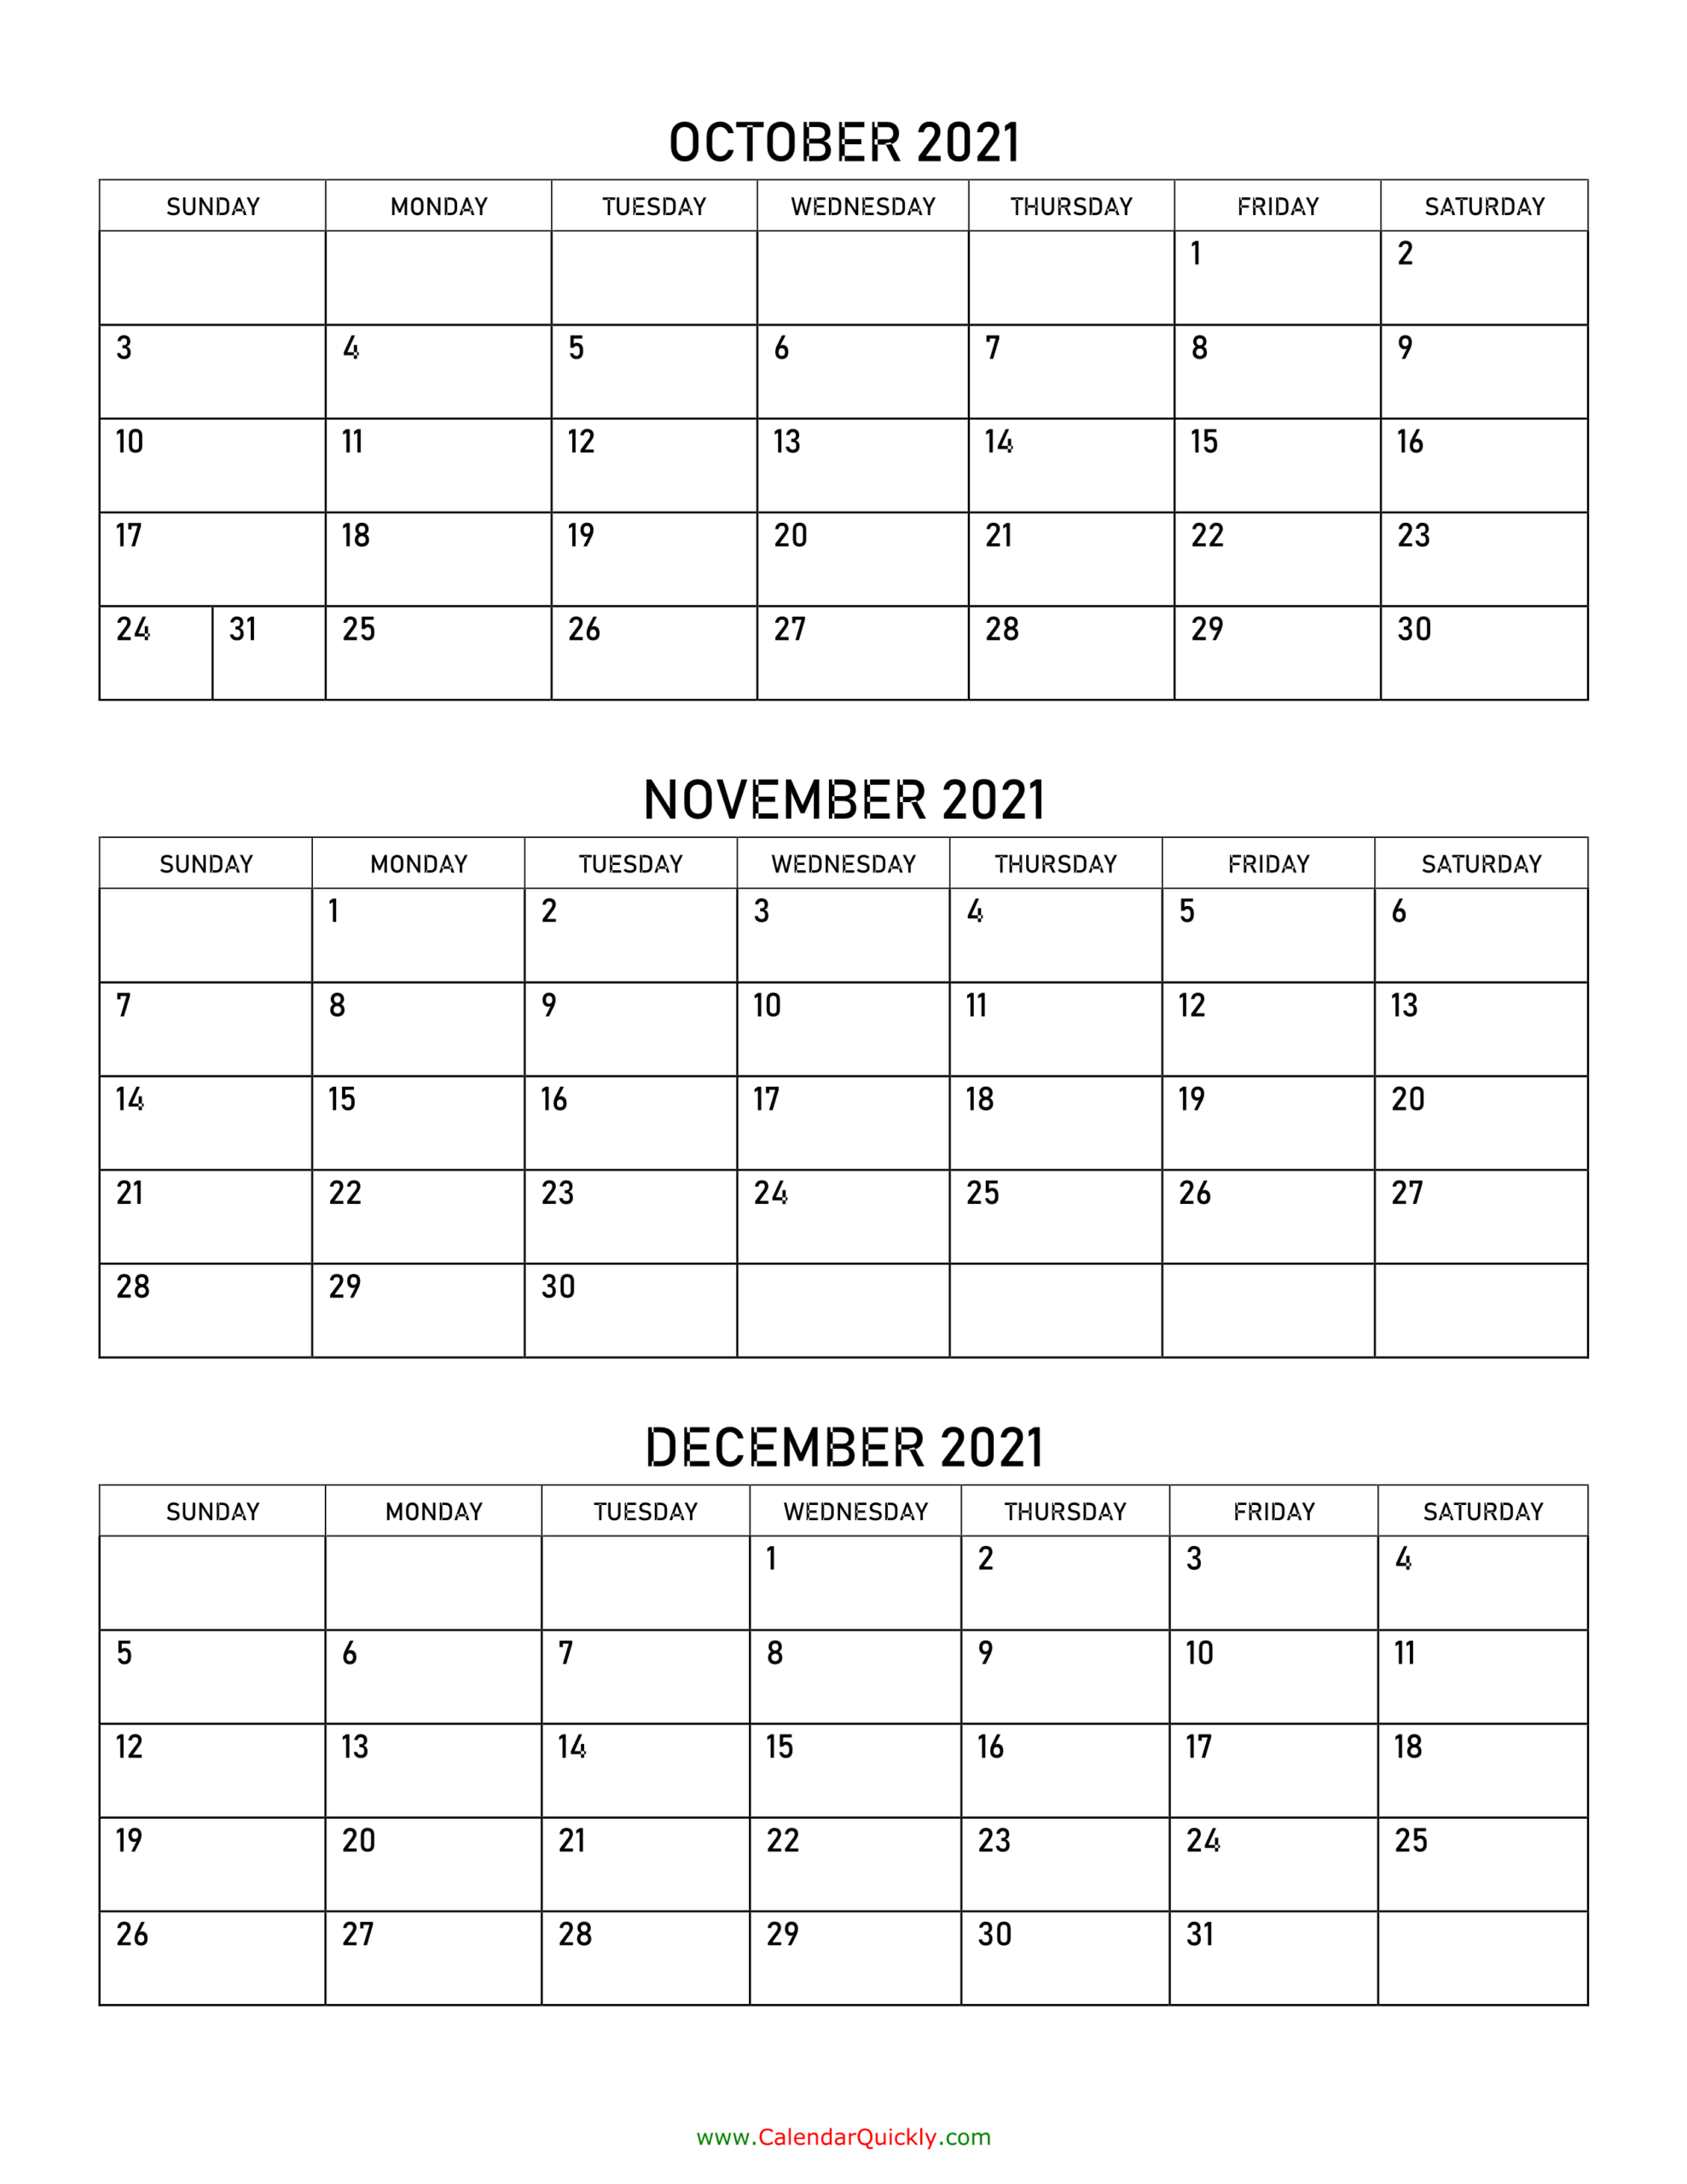 Get Calendar December 2021 To March 2022